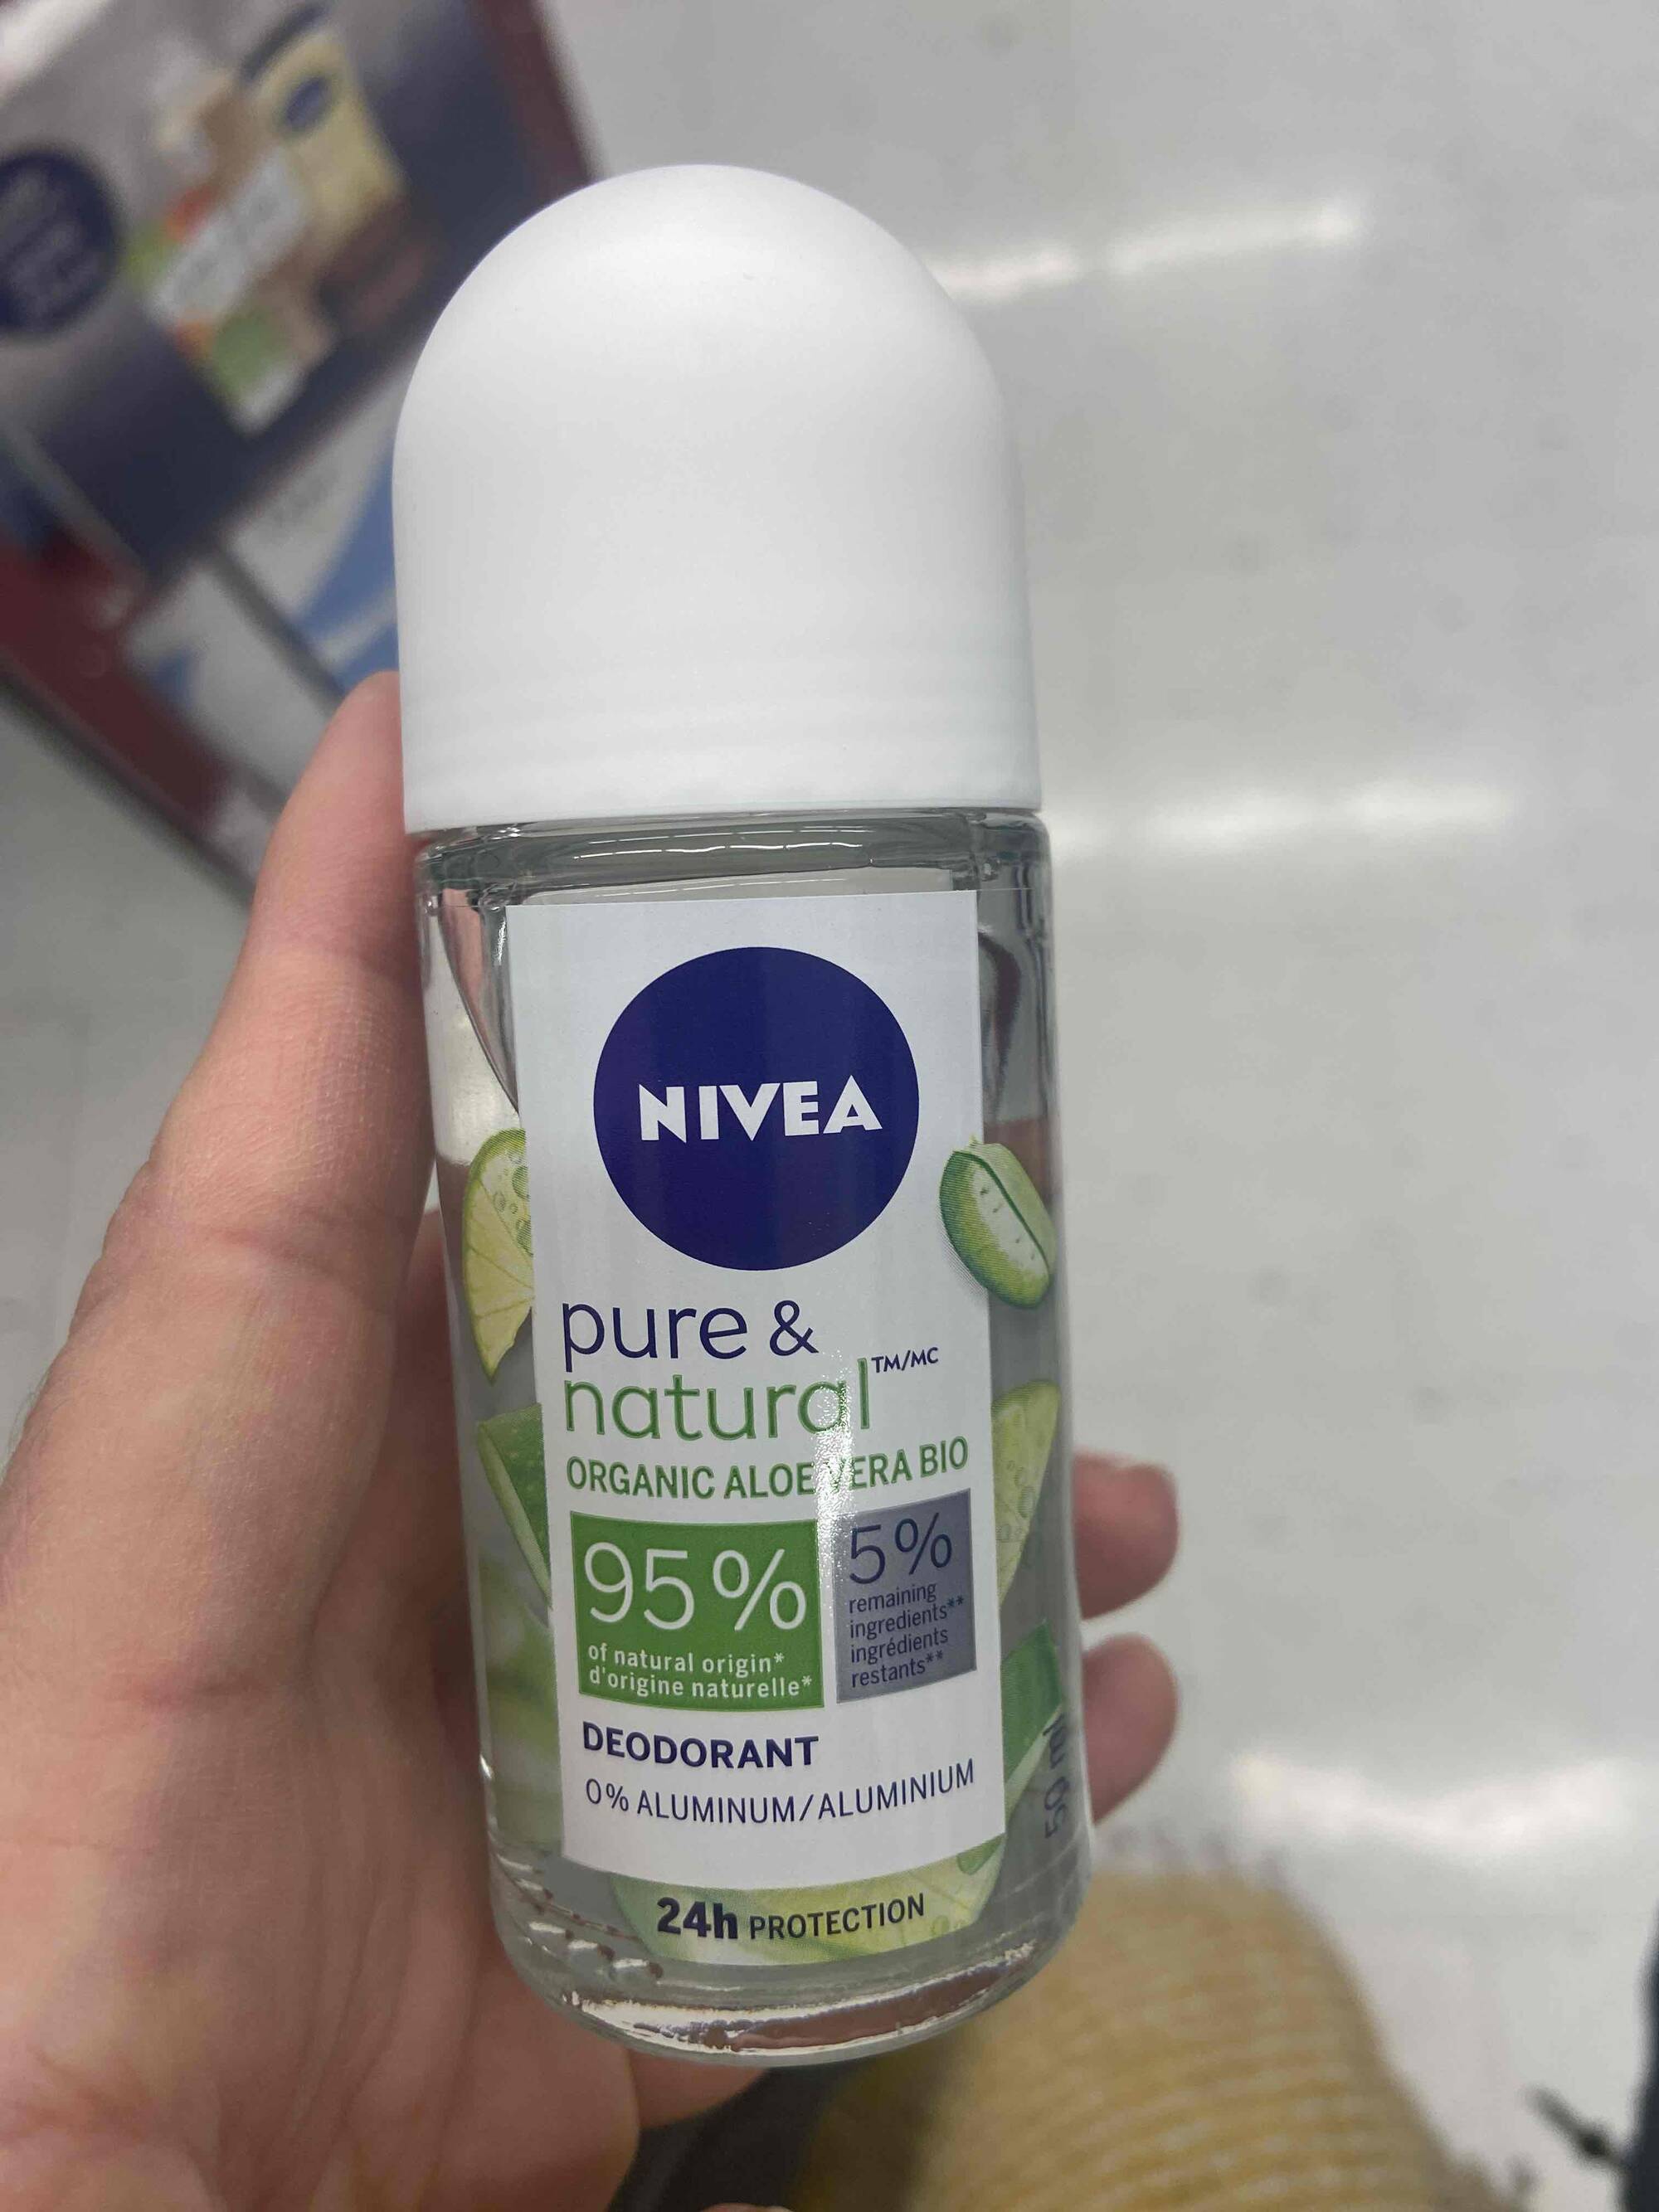 NIVEA - Pure & natural Deodorant 24h